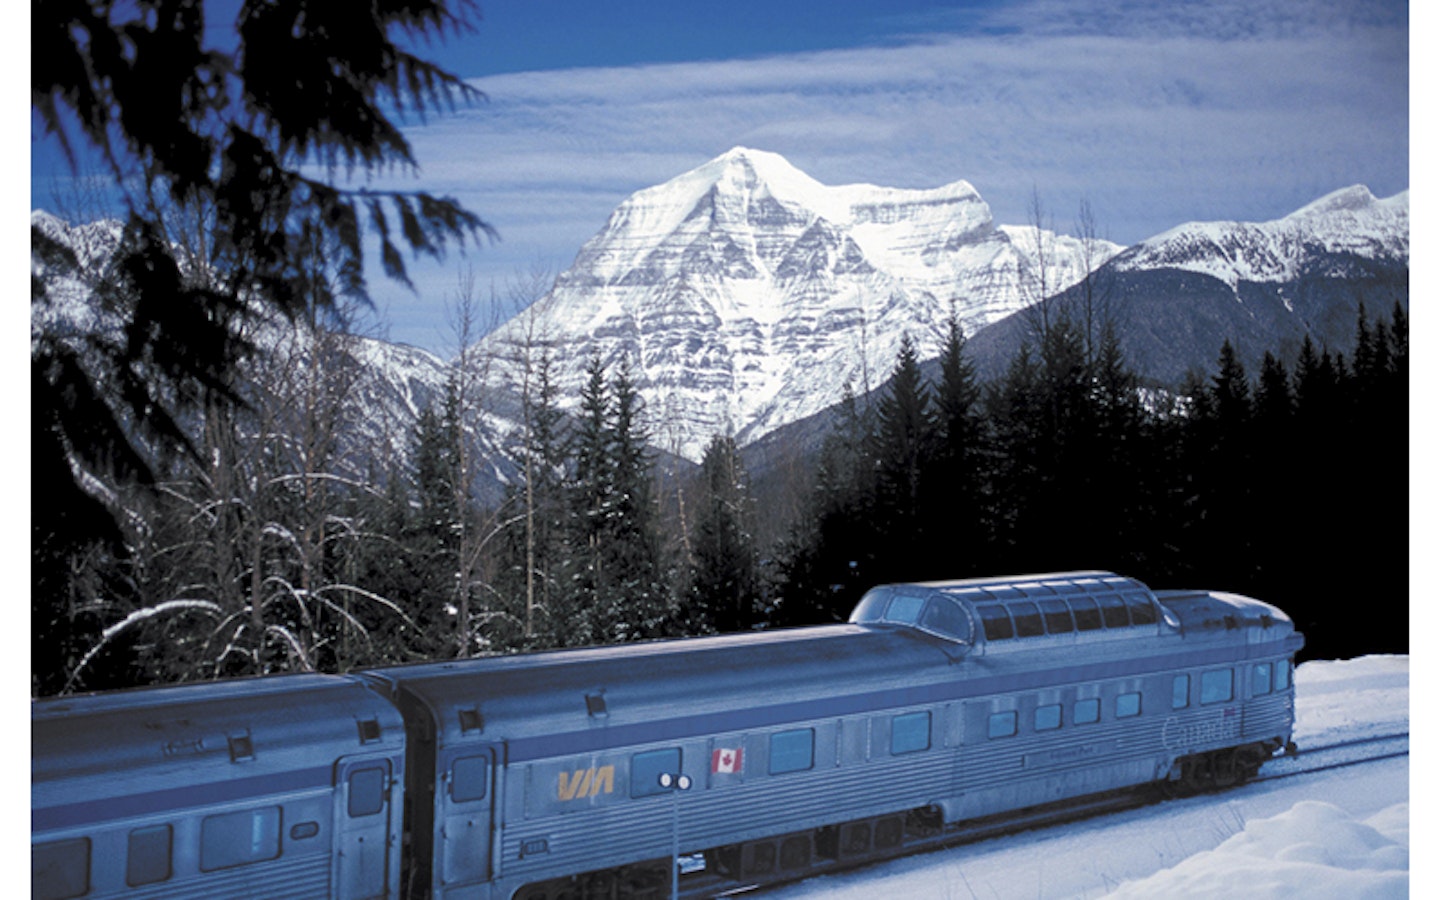 Rockies by rail 